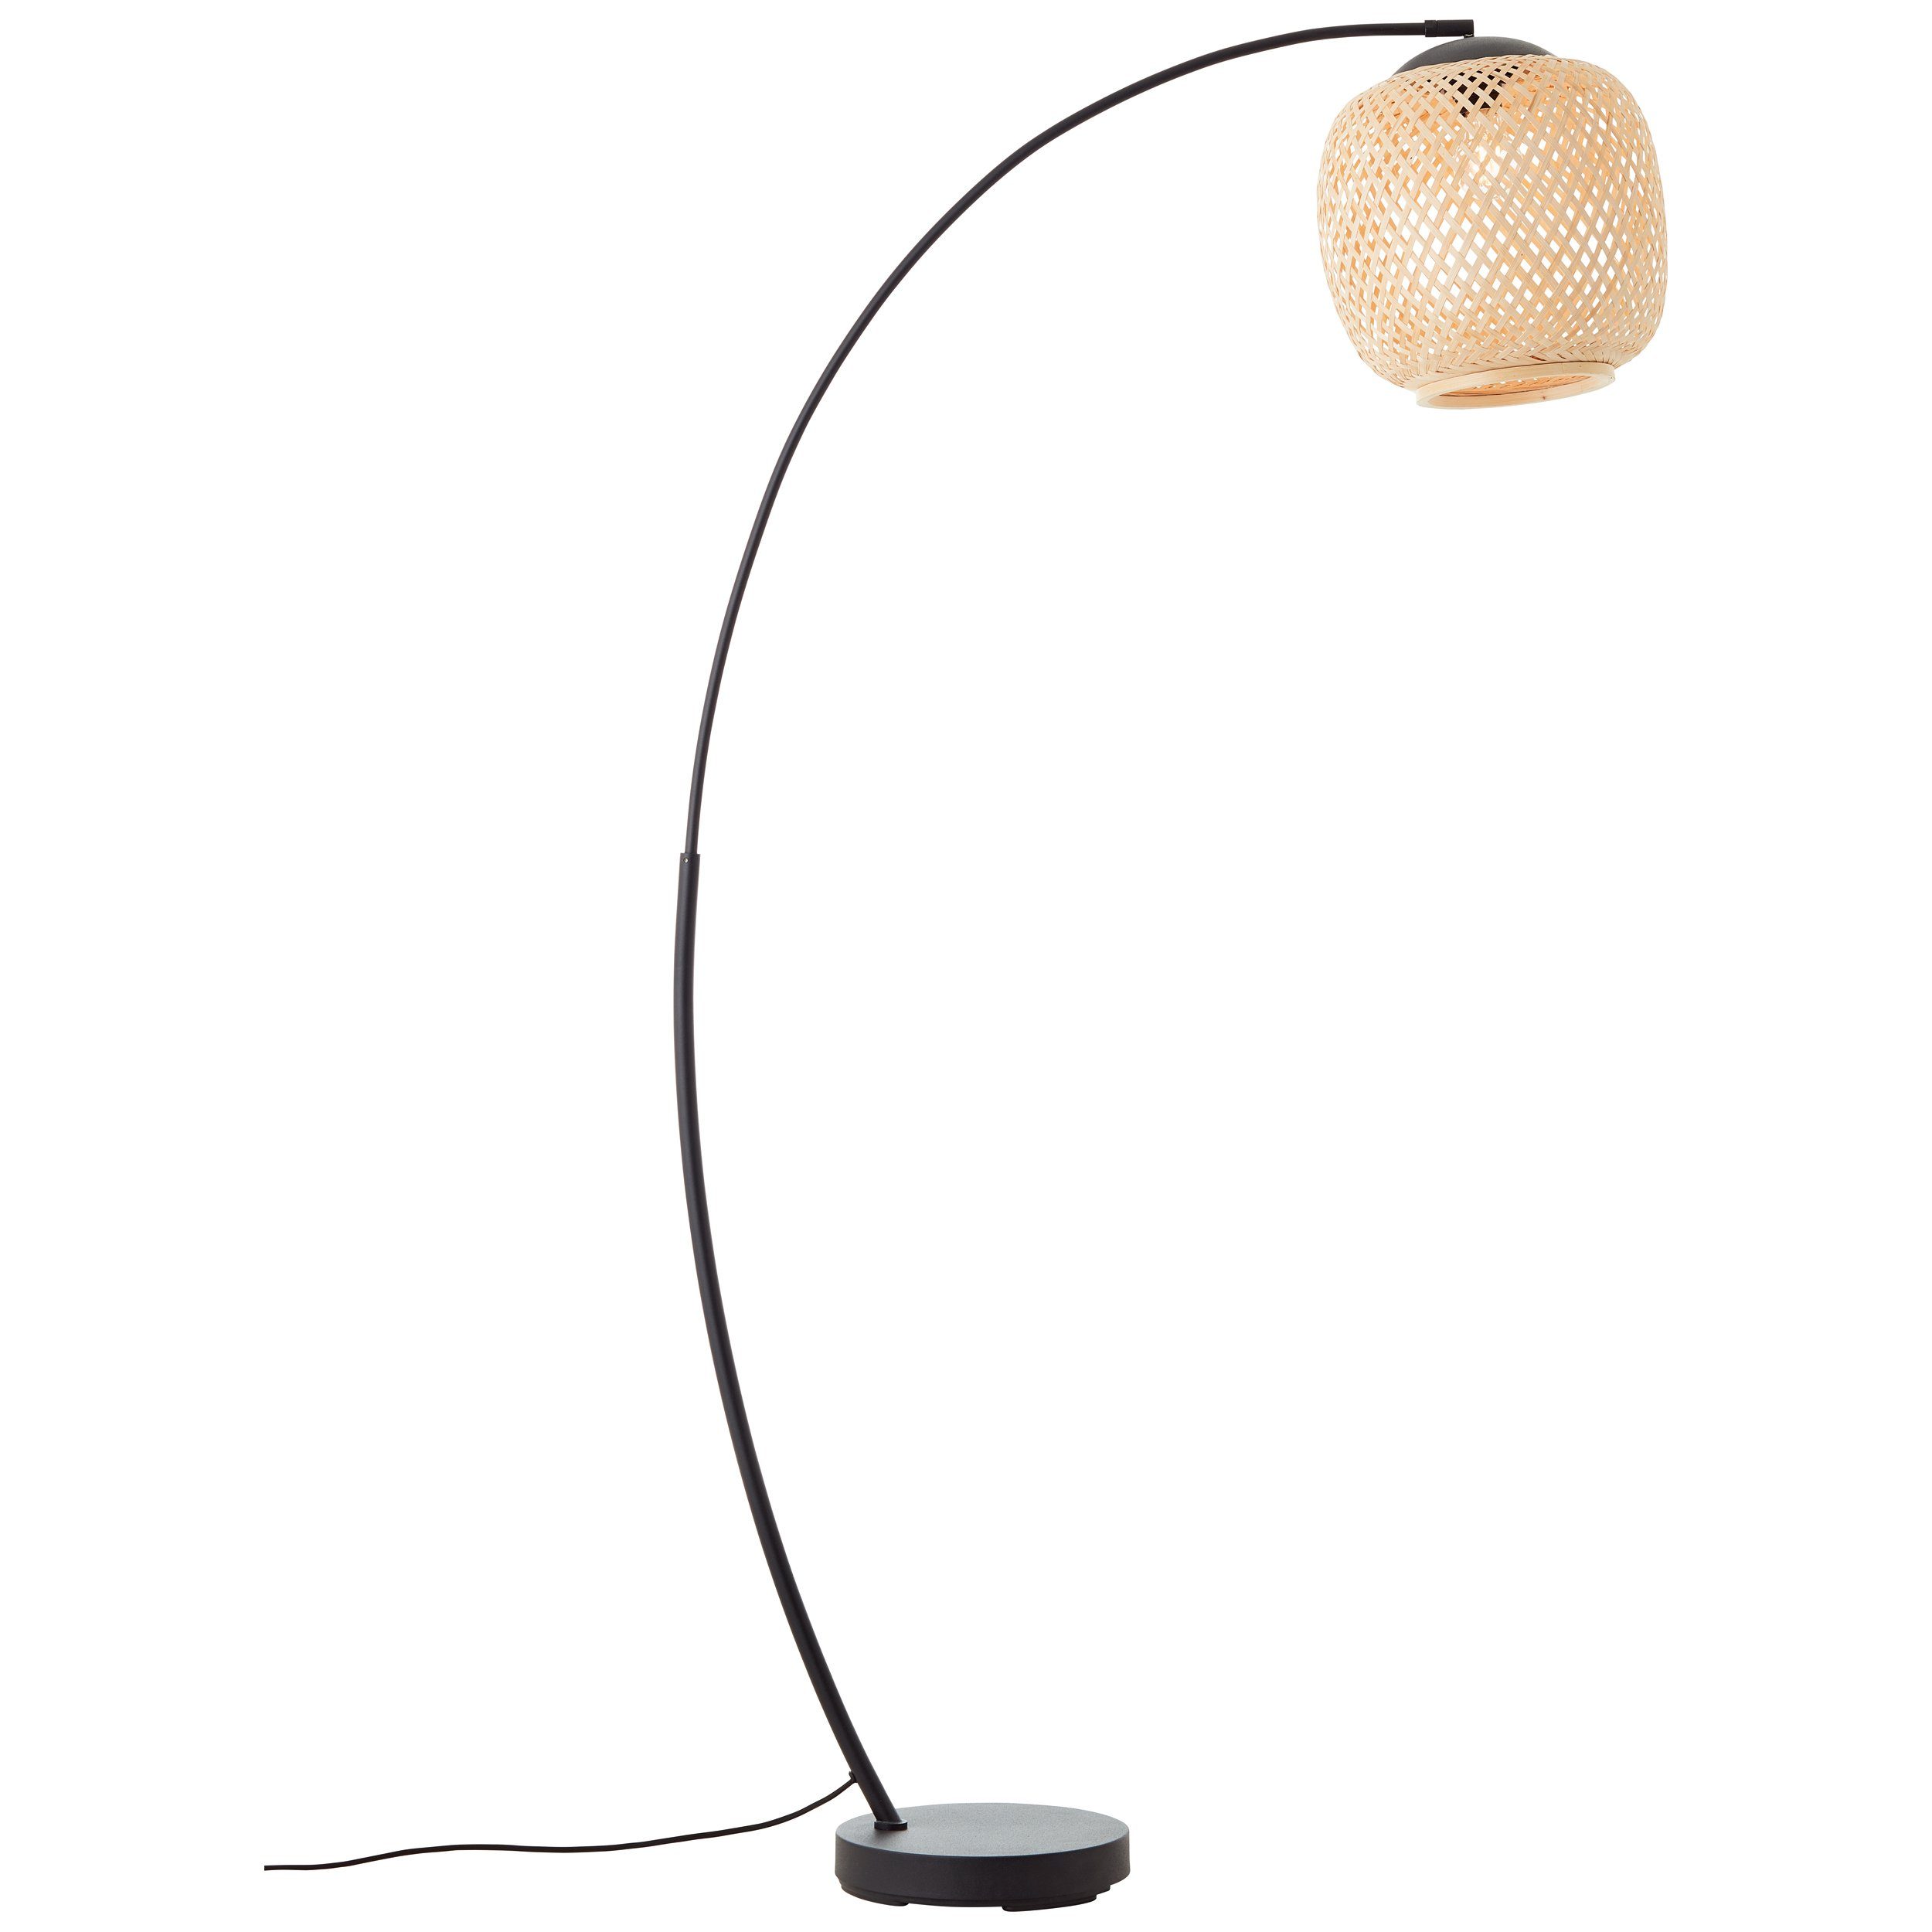 Metall/Bambus, E27 1x Standleuchte A60, Mesa schwarz/rattan, Mesa, Brilliant Stehlampe 1-flammig